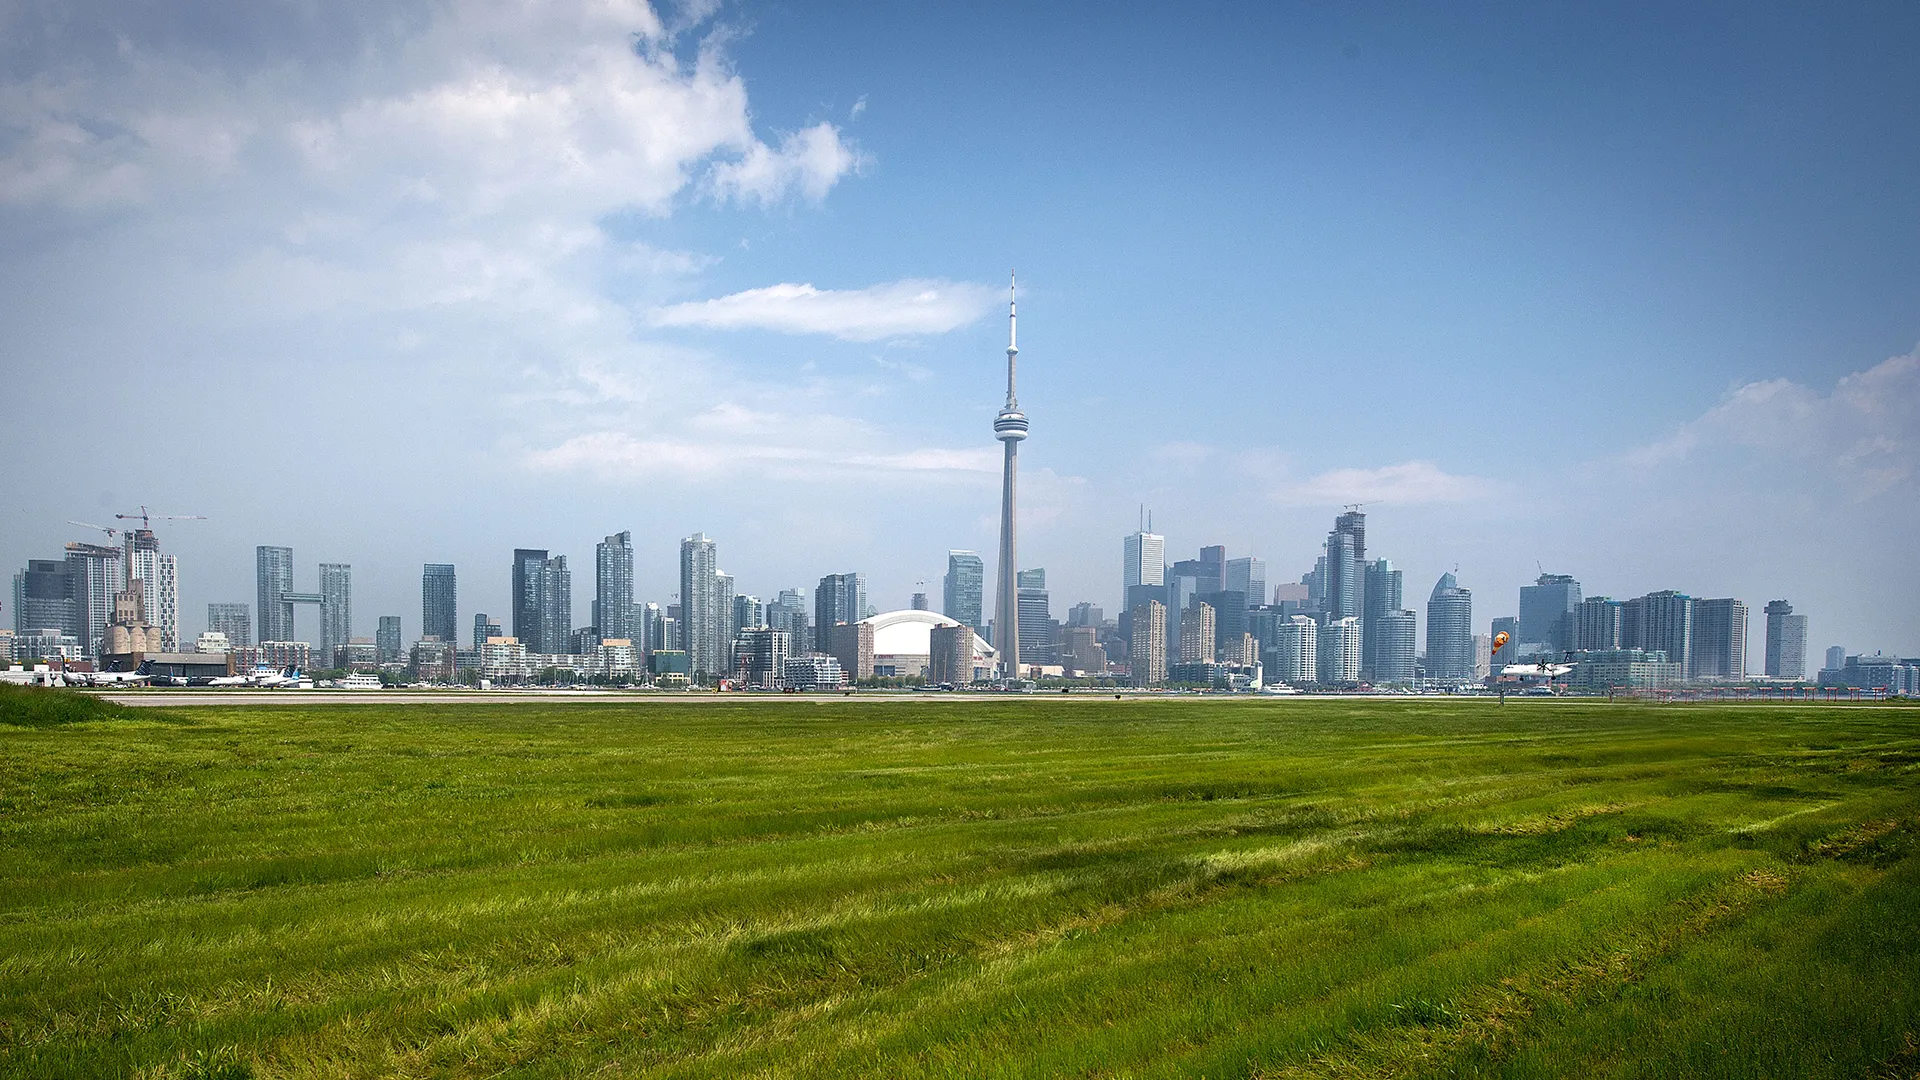 Toronto skyline photo taken from the airport